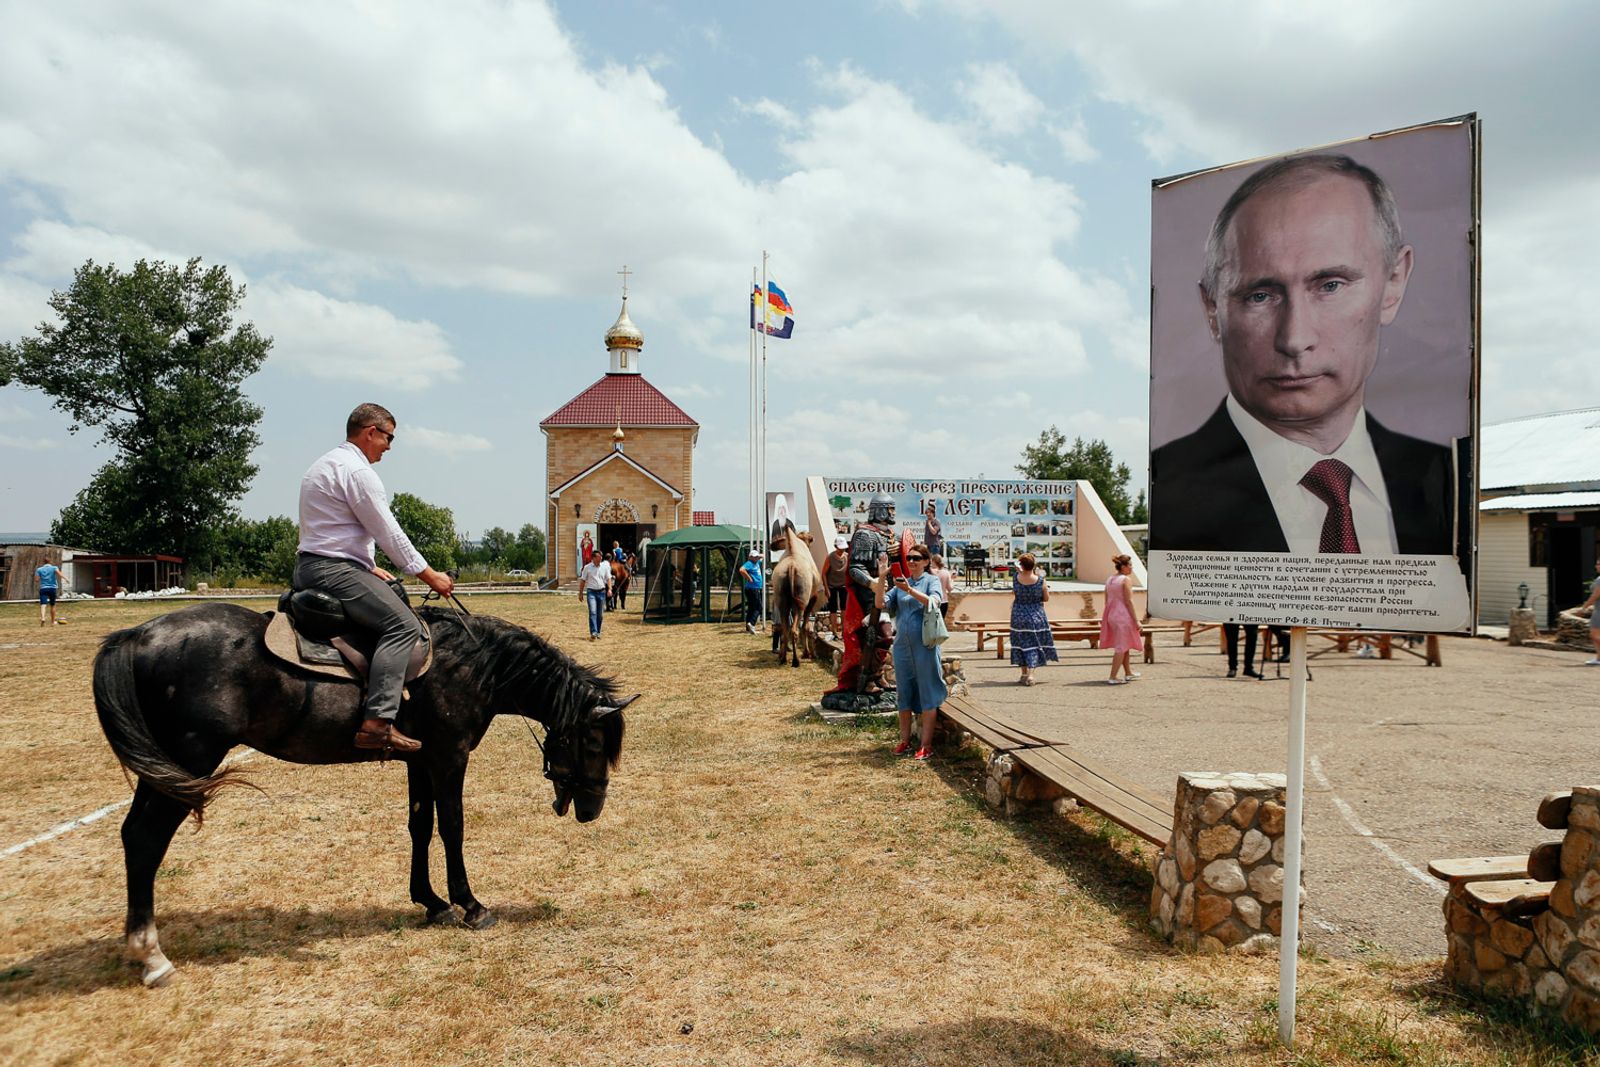 © EDUARD KORNIYENKO - Image from the Walls of Putin photography project